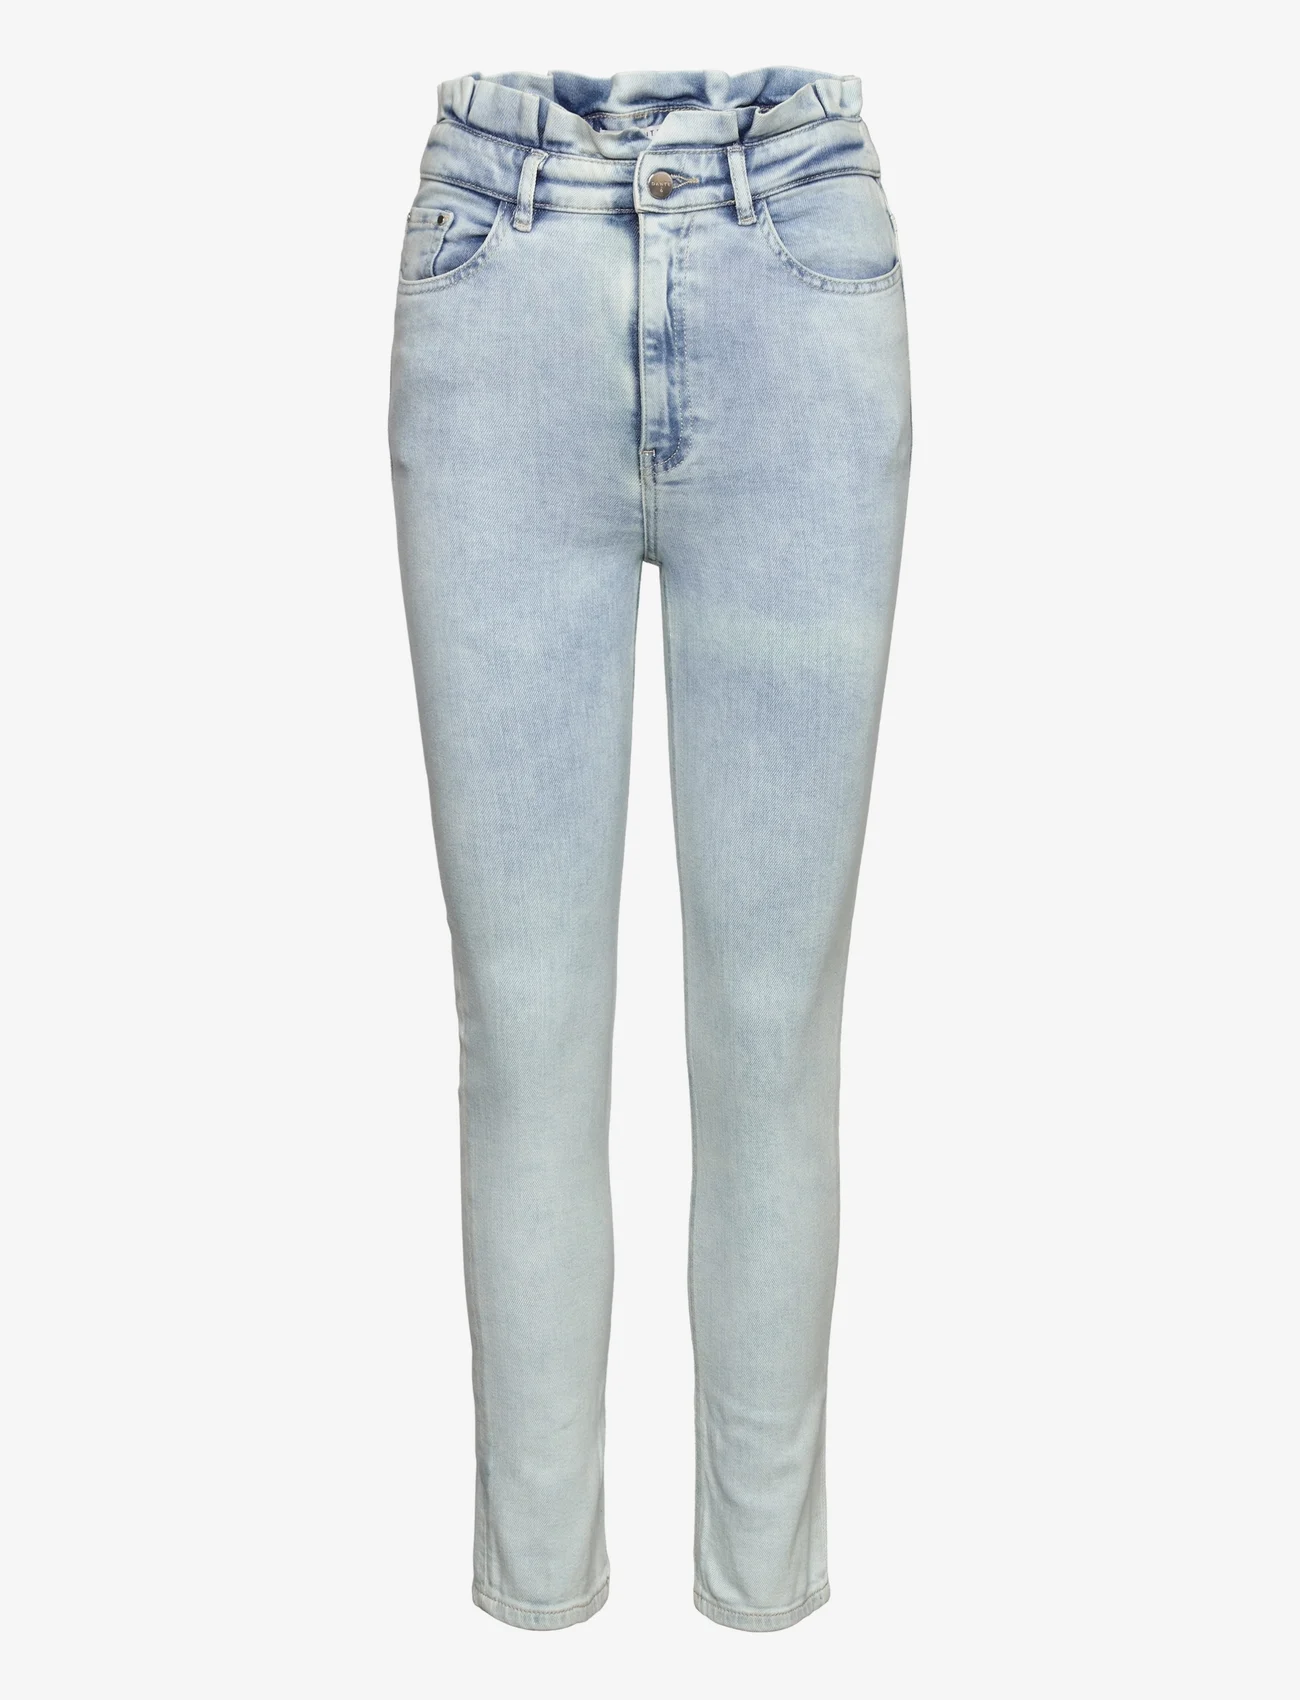 Dante6 - Zoey bleached denim pants - slim jeans - bleached denim - 0